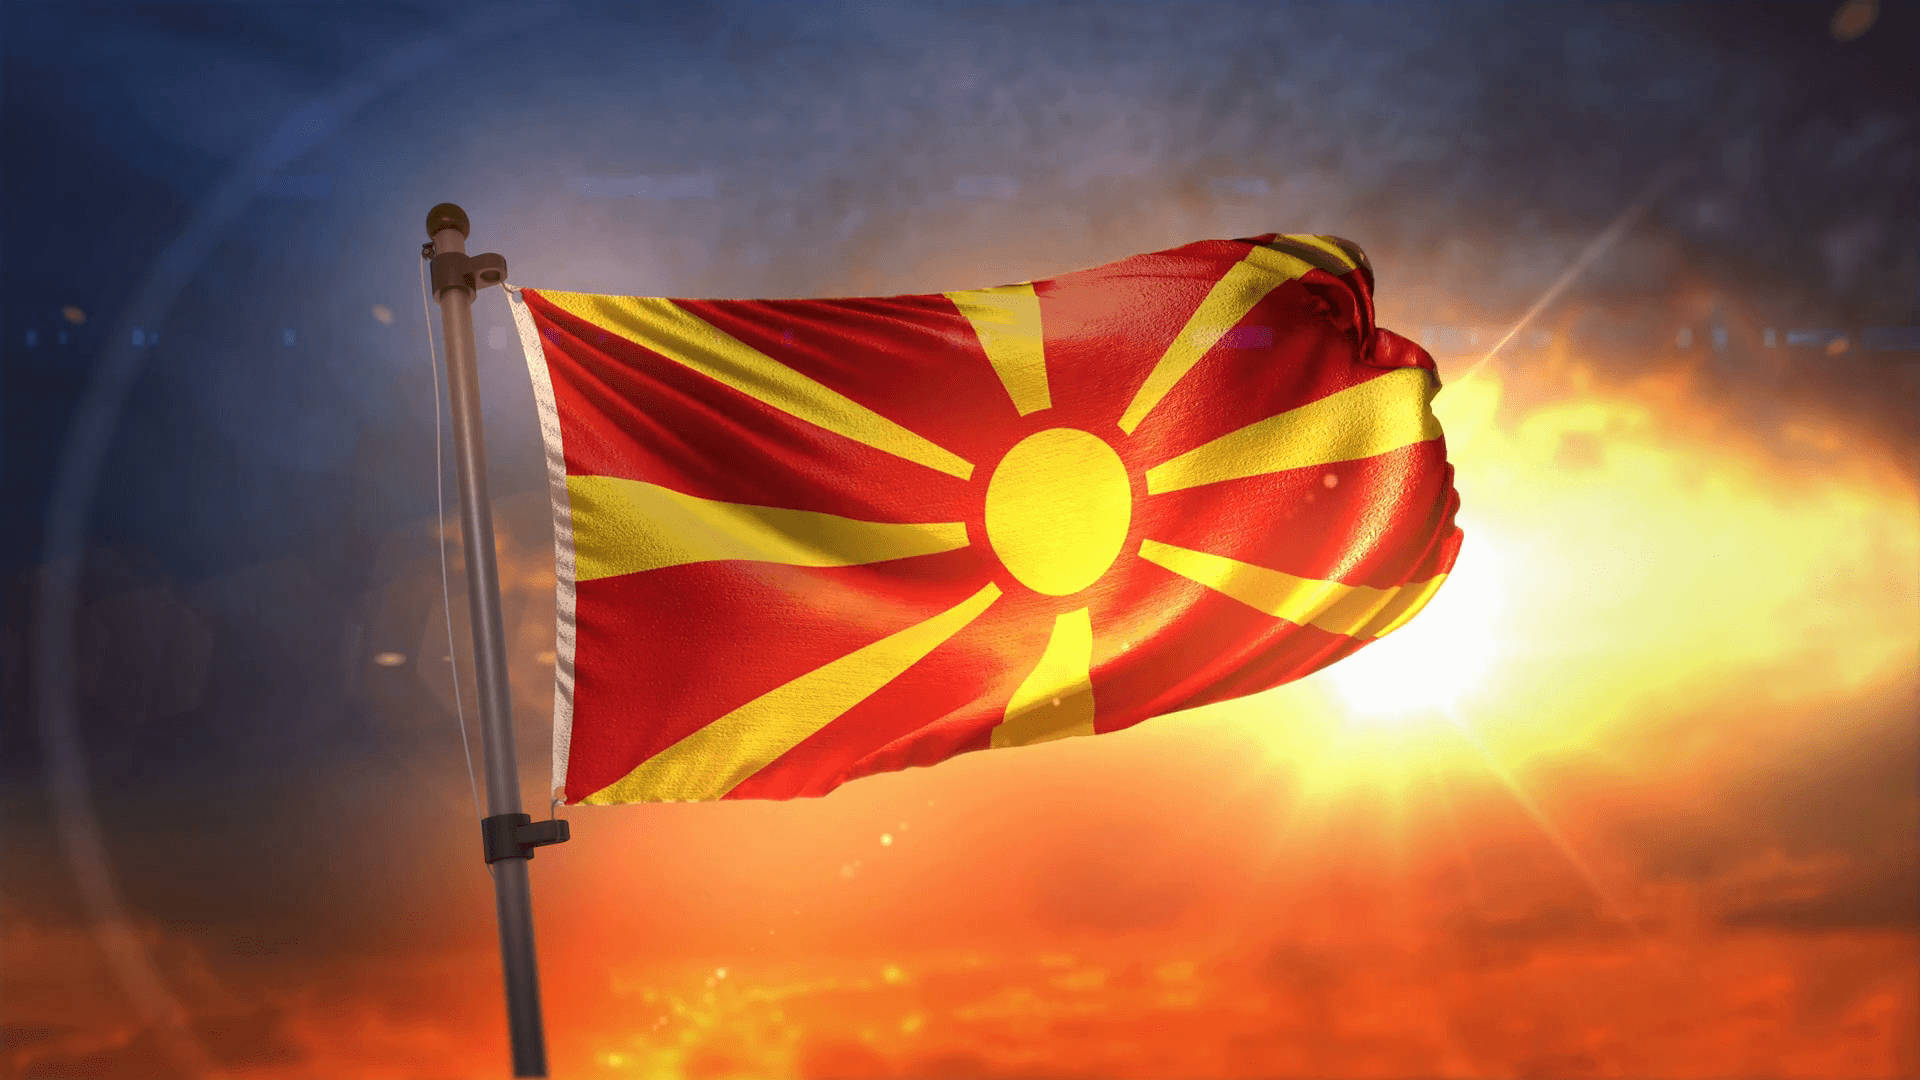 Macedonia Flag Against Bright Sun